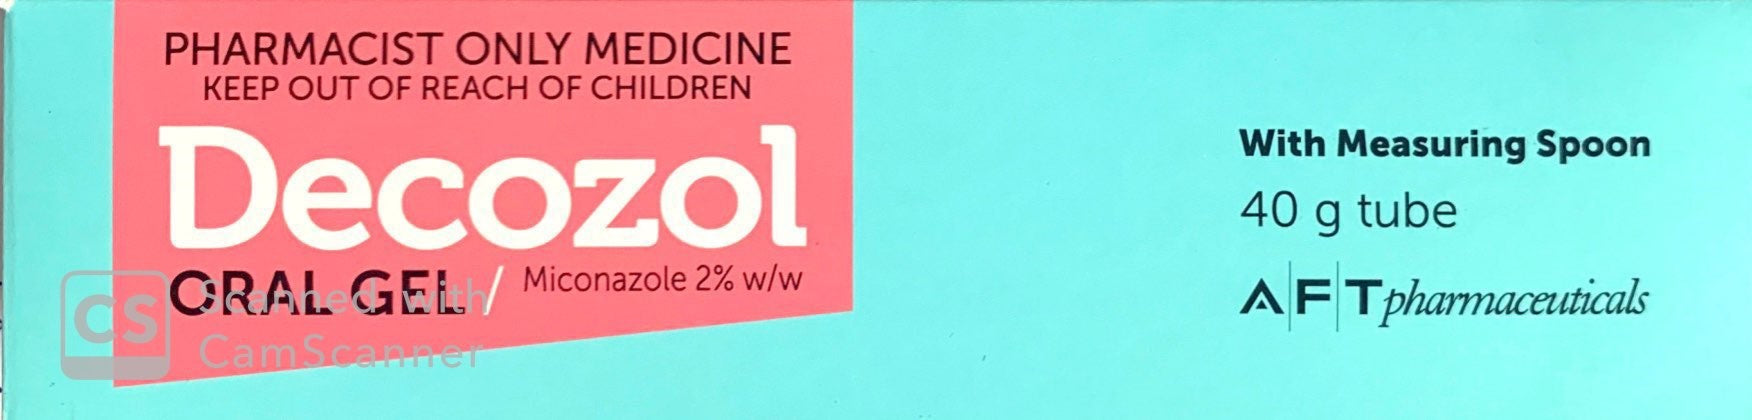 Decozol Oral Gel For Treatment Of Candidiasis 40g - Pharmacist Only Medicine - Pakuranga Pharmacy